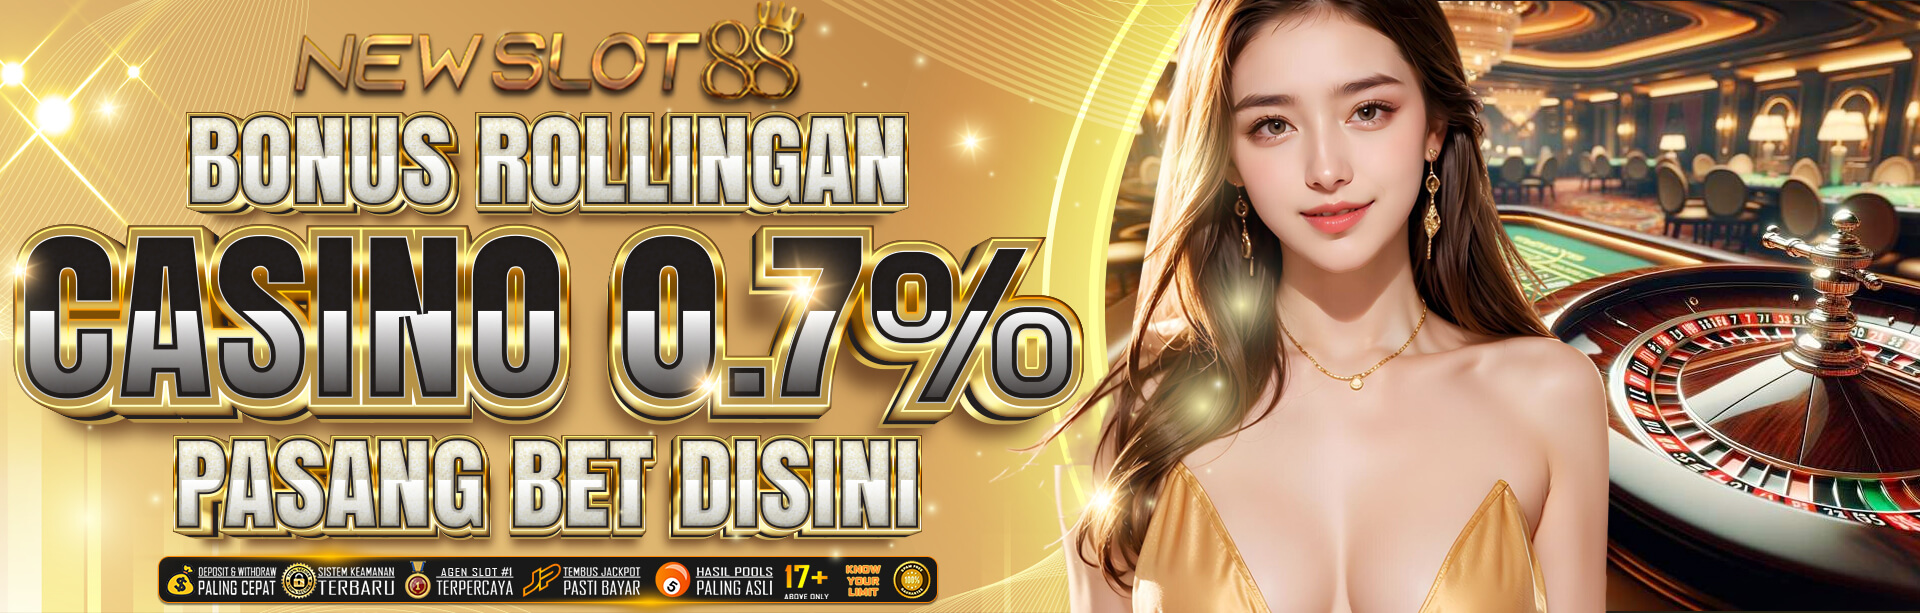 Bonus Rollingan Live Casino 0.7%